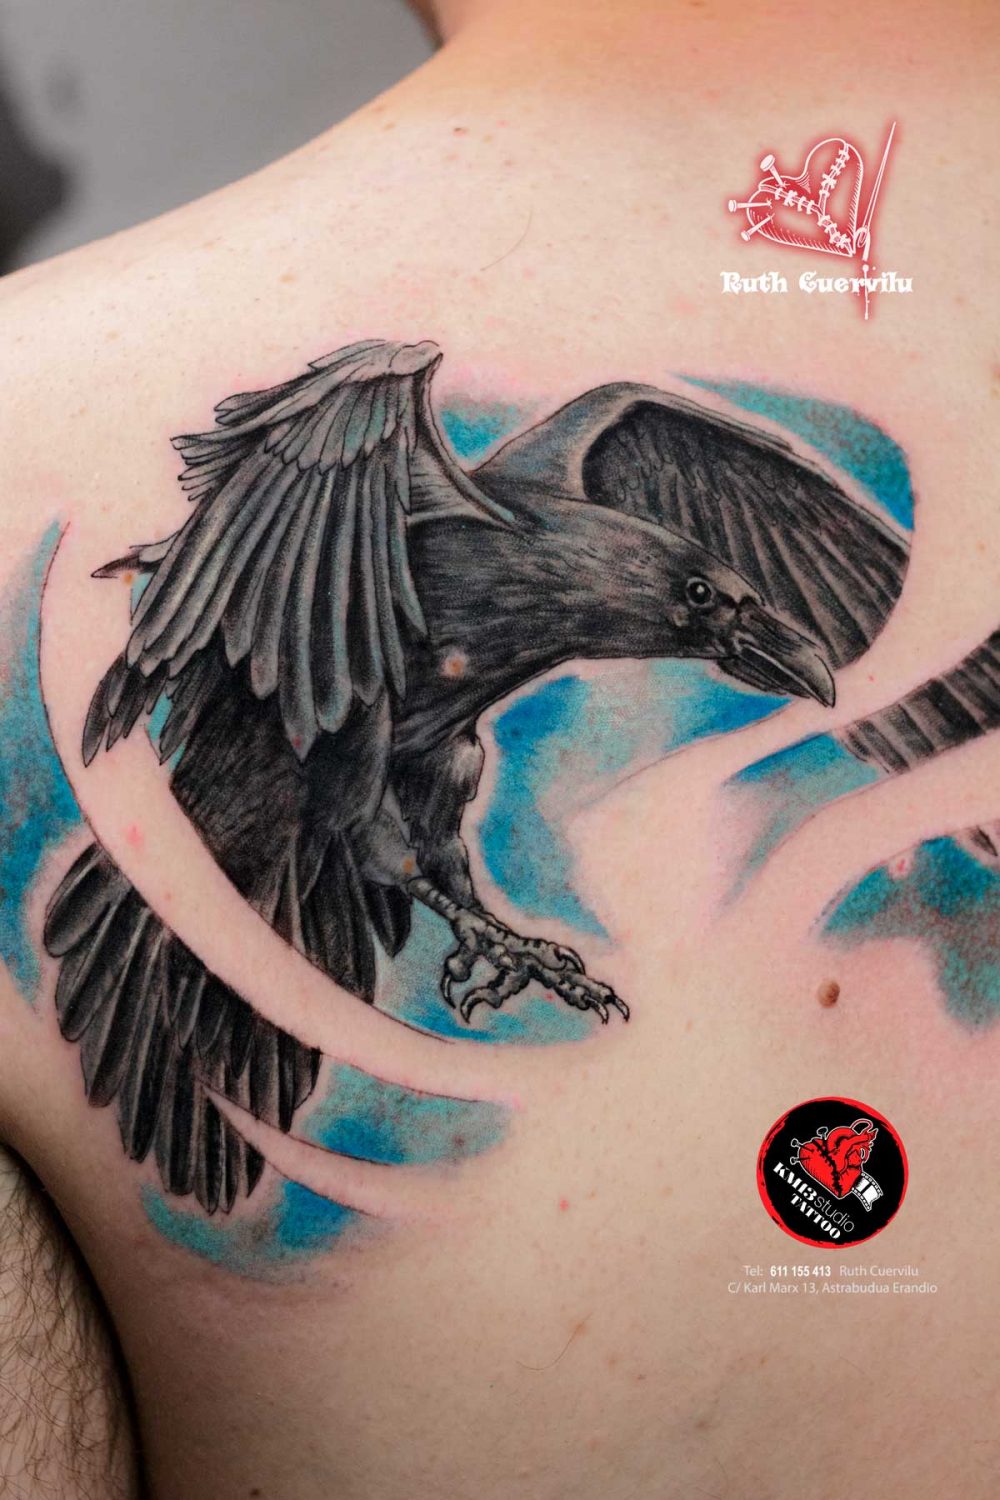 Tatuaje Cuervo realismo - Ruth Cuervilu Tattoo - KM13 Studio - estudio de tatuajes erandio astrabudua bilbao bizkaia